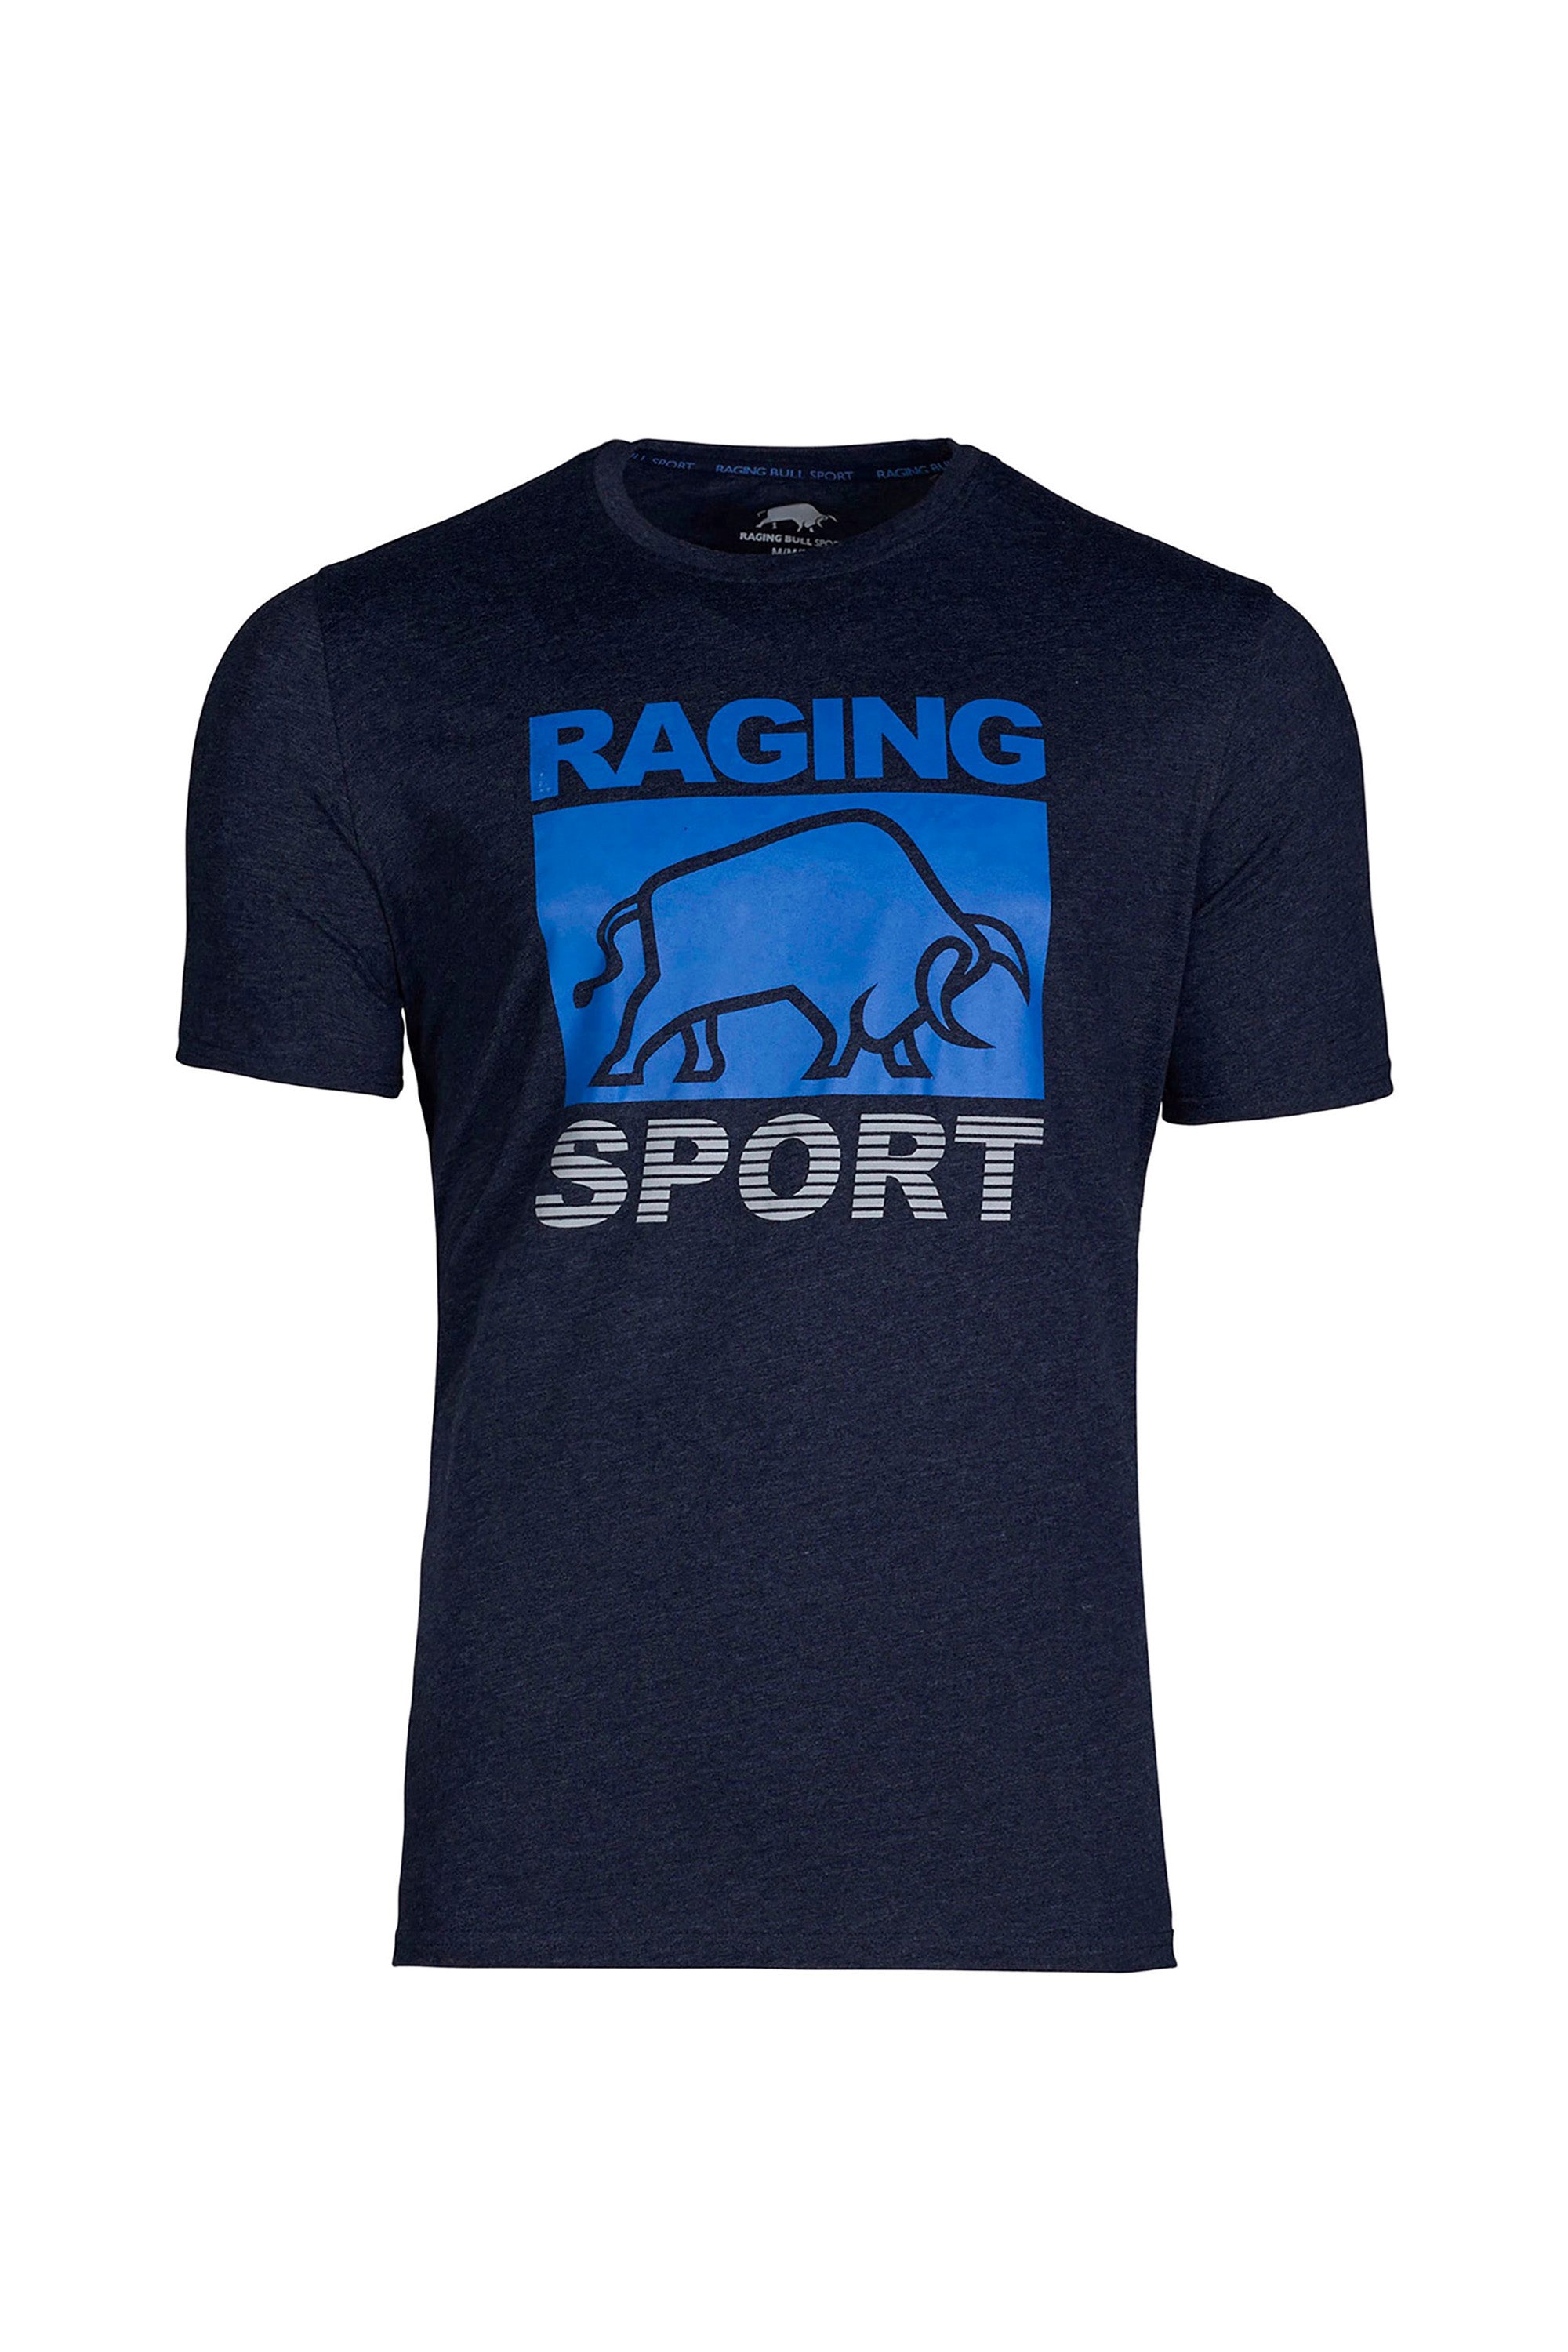 RB Sport Casual Mens T-Shirt -